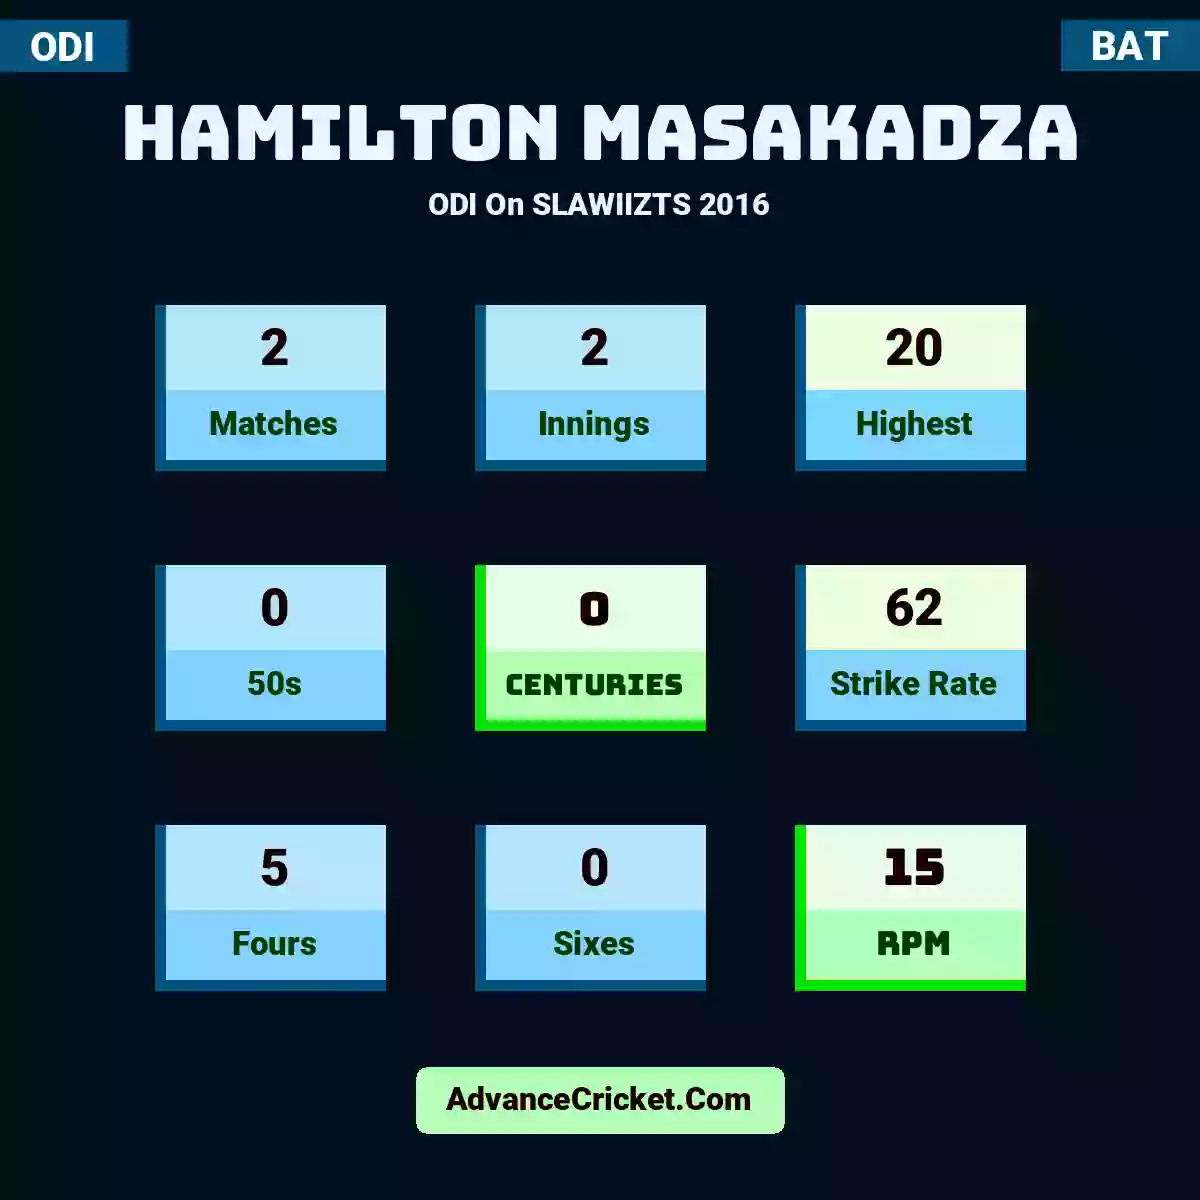 Hamilton Masakadza ODI  On SLAWIIZTS 2016, Hamilton Masakadza played 2 matches, scored 20 runs as highest, 0 half-centuries, and 0 centuries, with a strike rate of 62. H.Masakadza hit 5 fours and 0 sixes, with an RPM of 15.